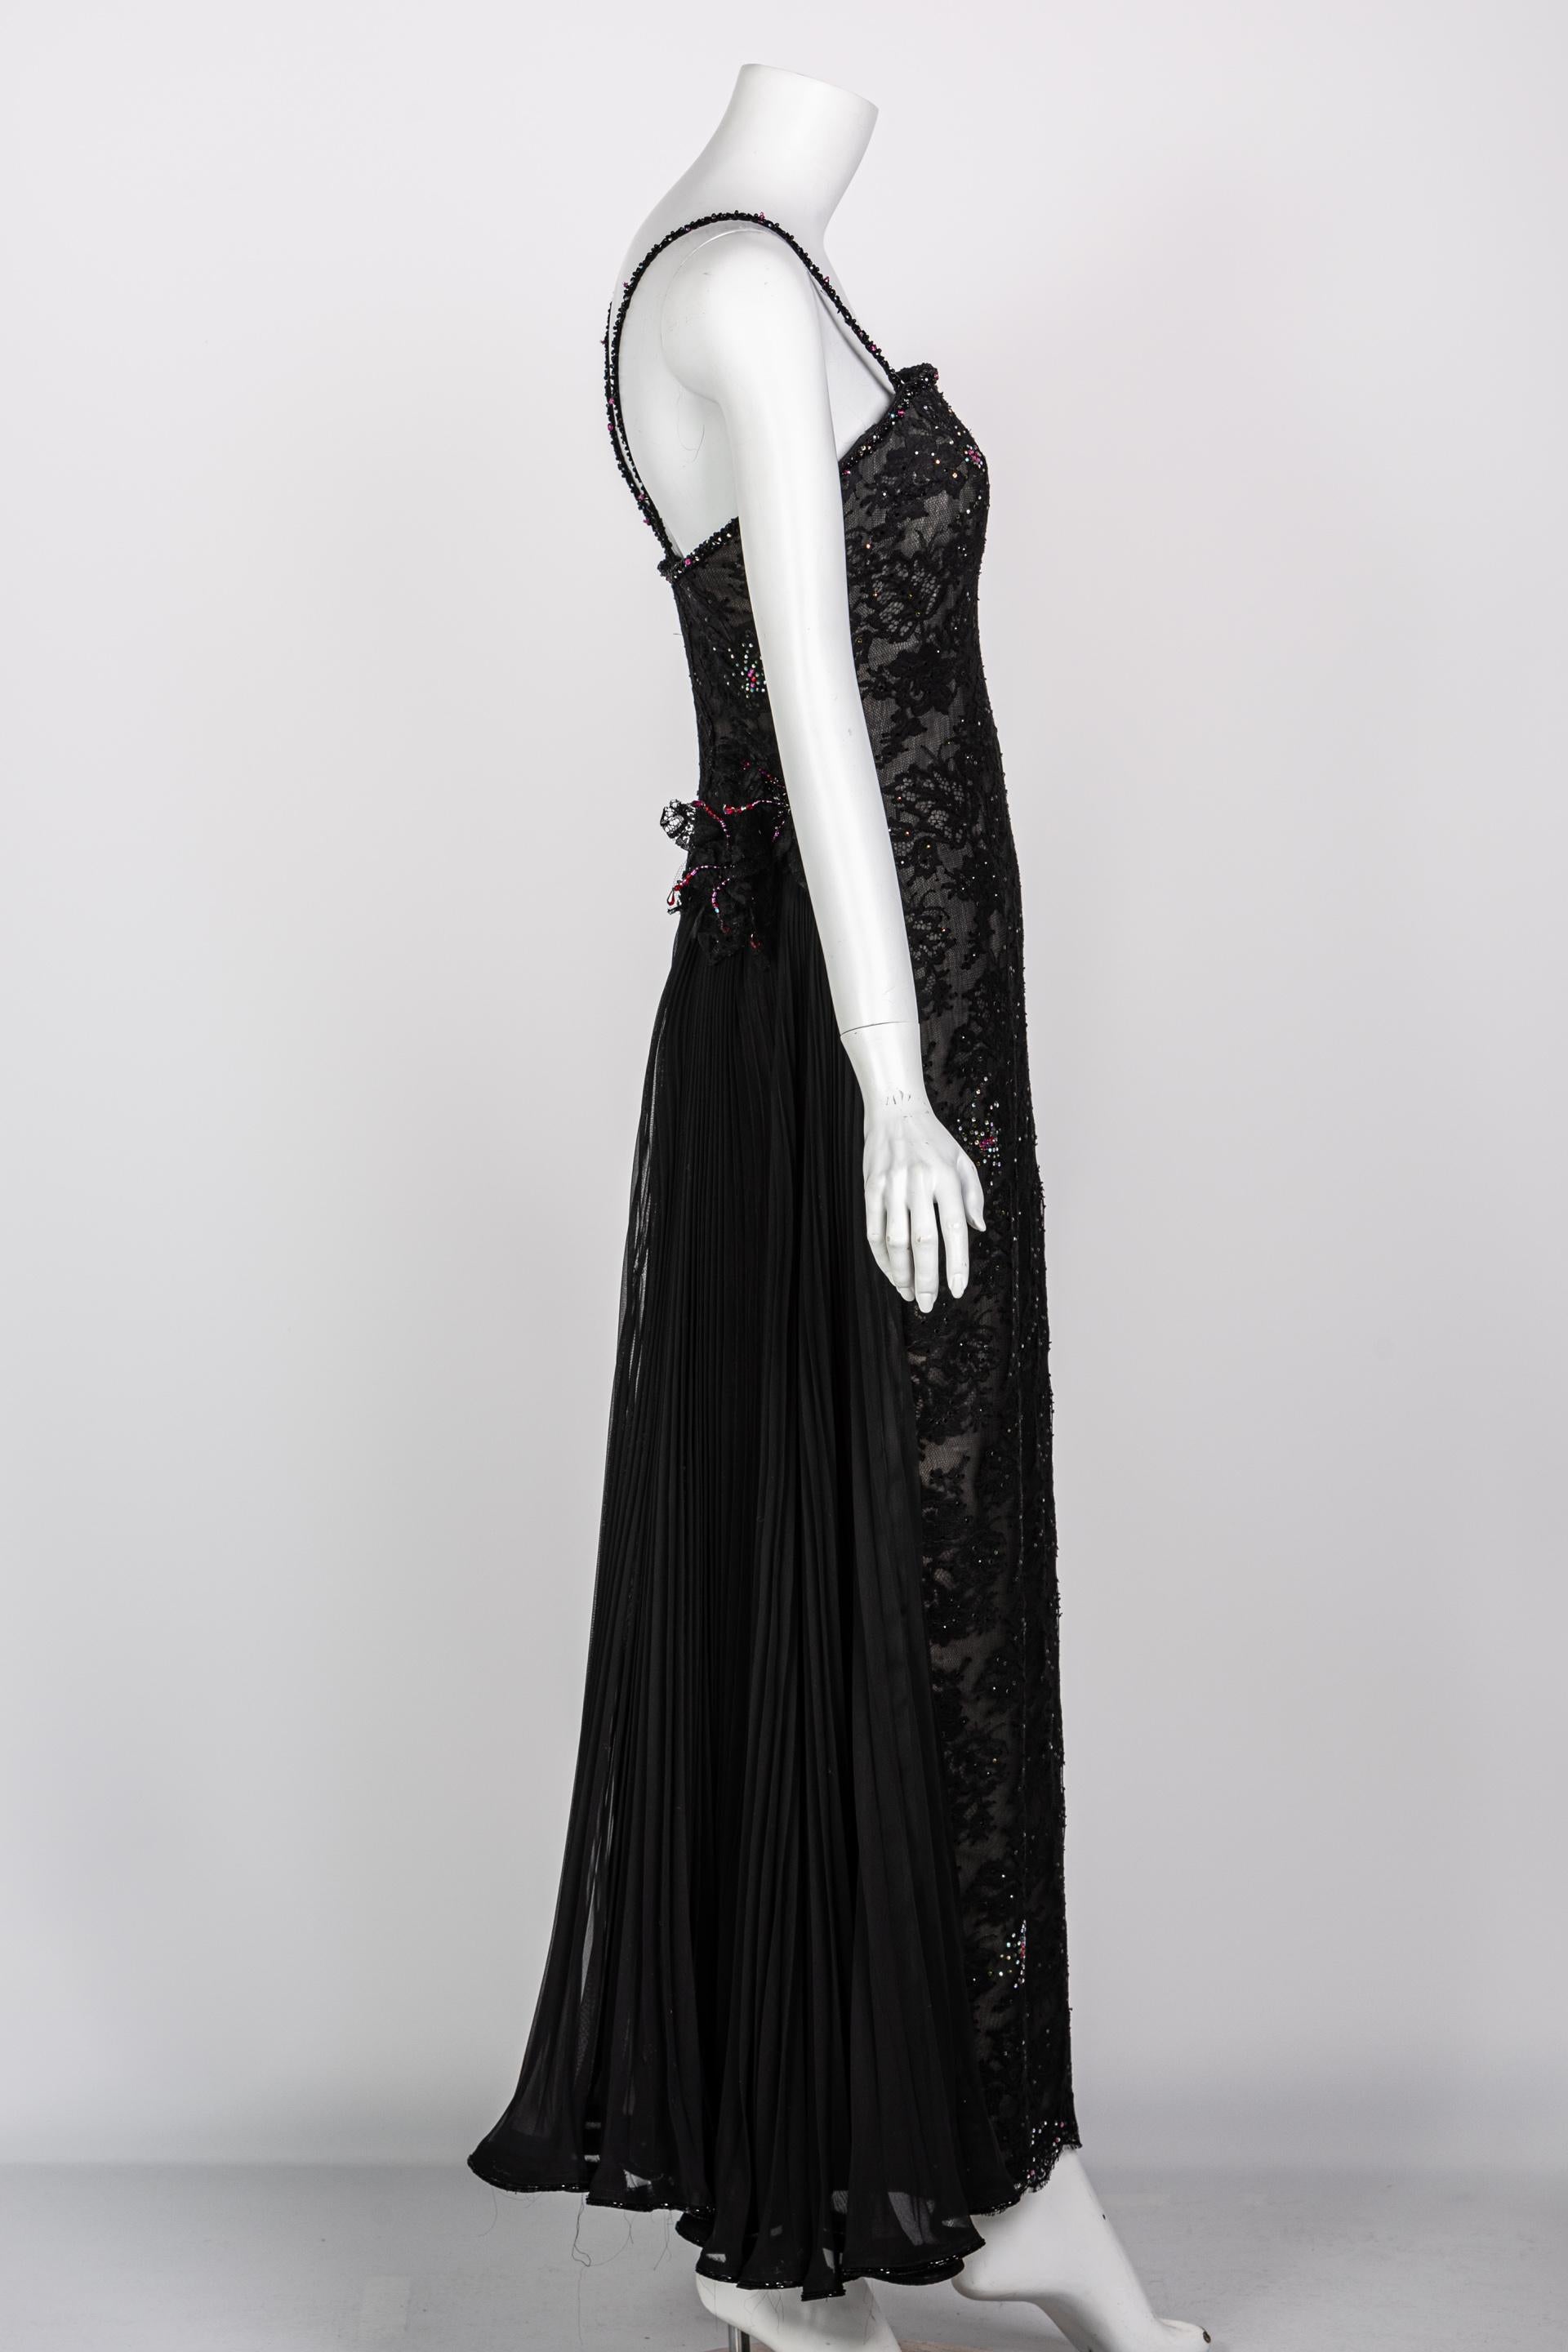 Vintage Sam Carlin Saks Fifth Avenue Black Lace Gown For Sale 8